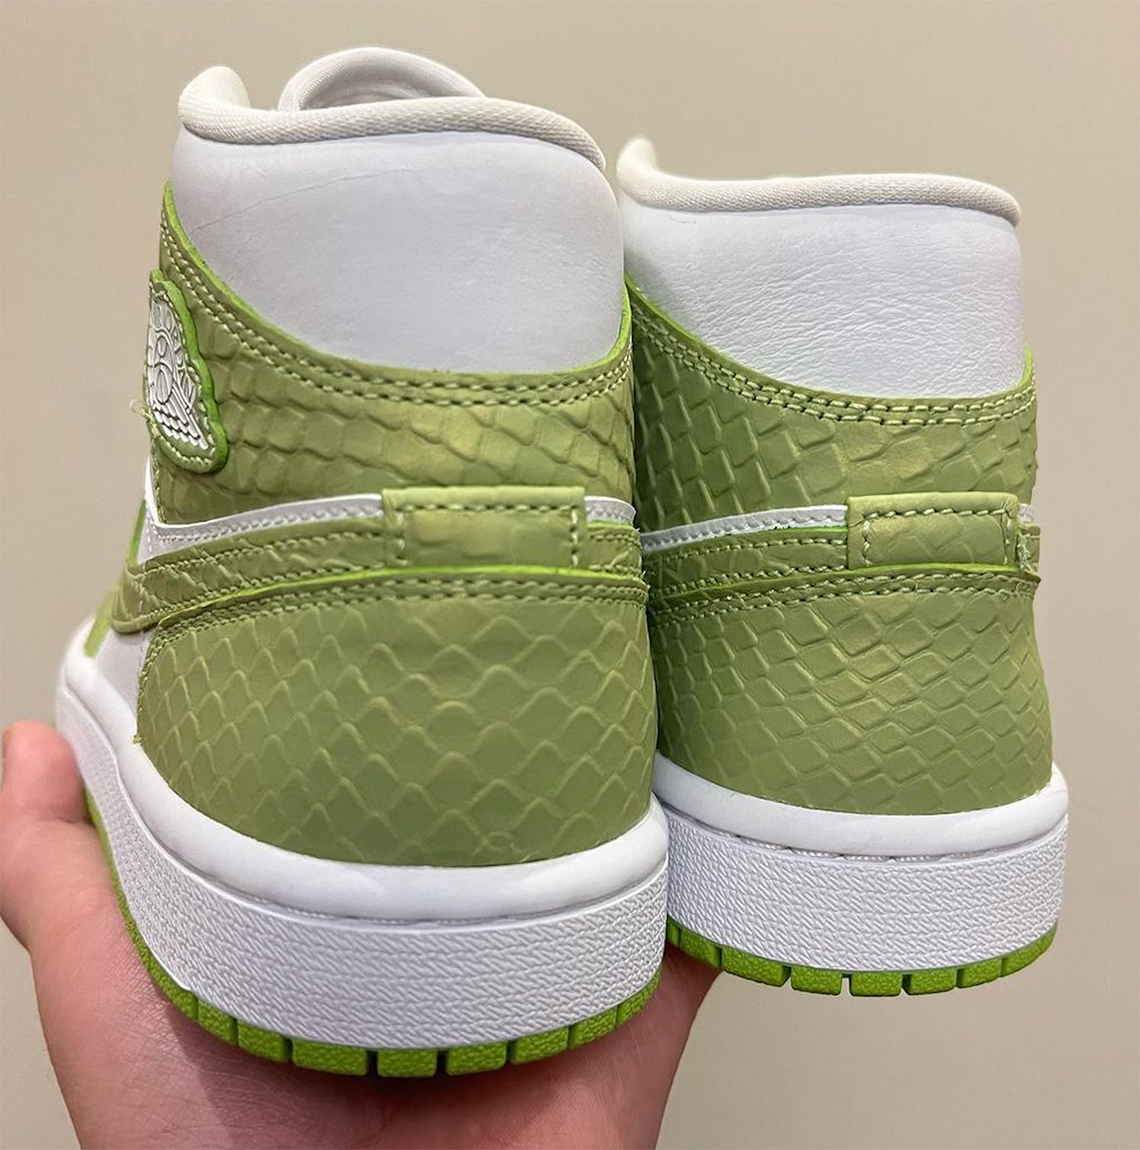 Air Jordan 1 Mid Reptile Leather Release Info | SneakerNews.com